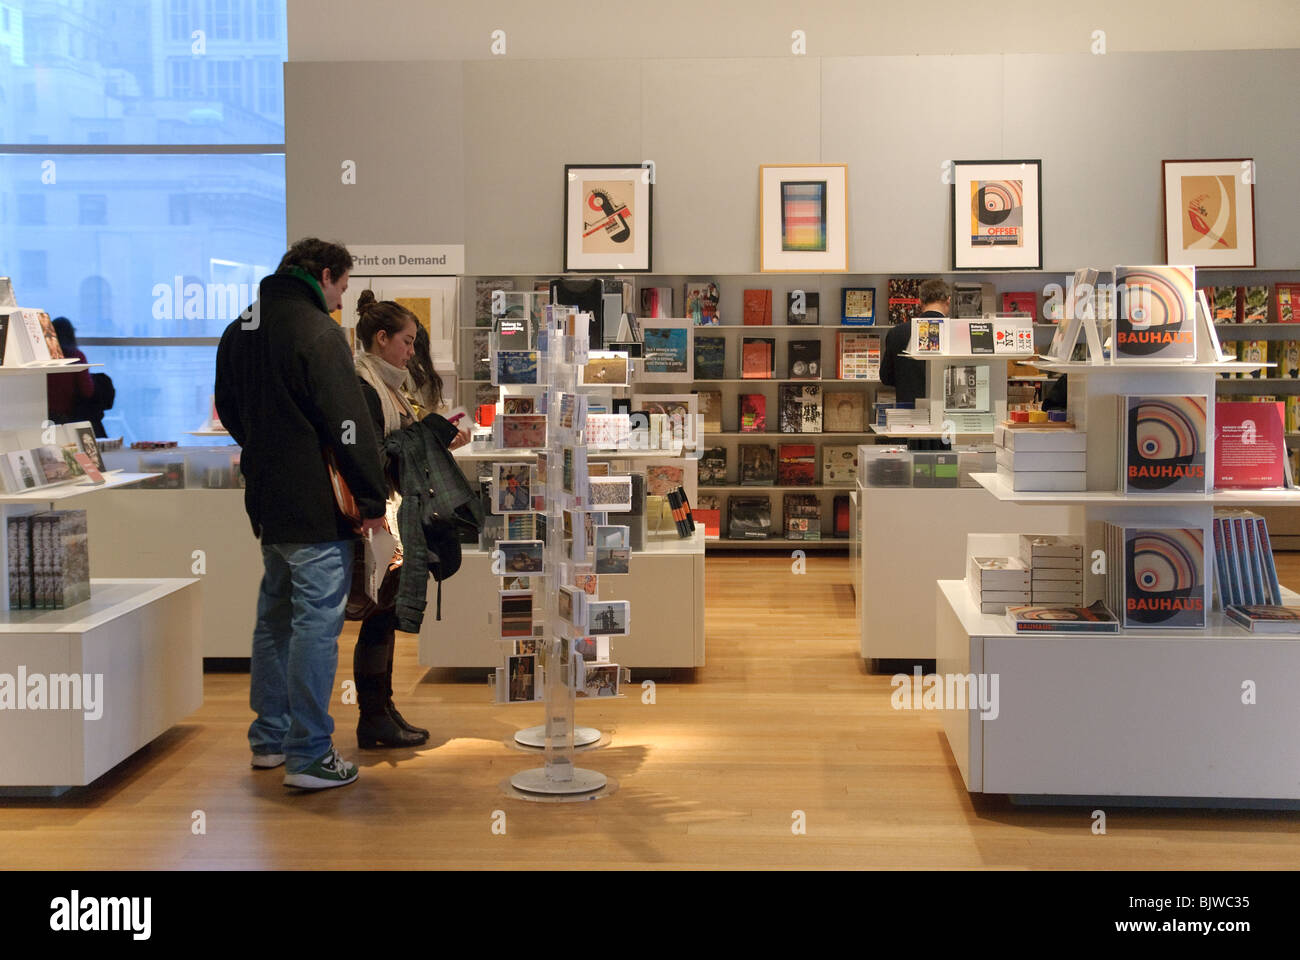 MOMA, Museum of Modern Art, Book Shop, York Stock Photo - Alamy